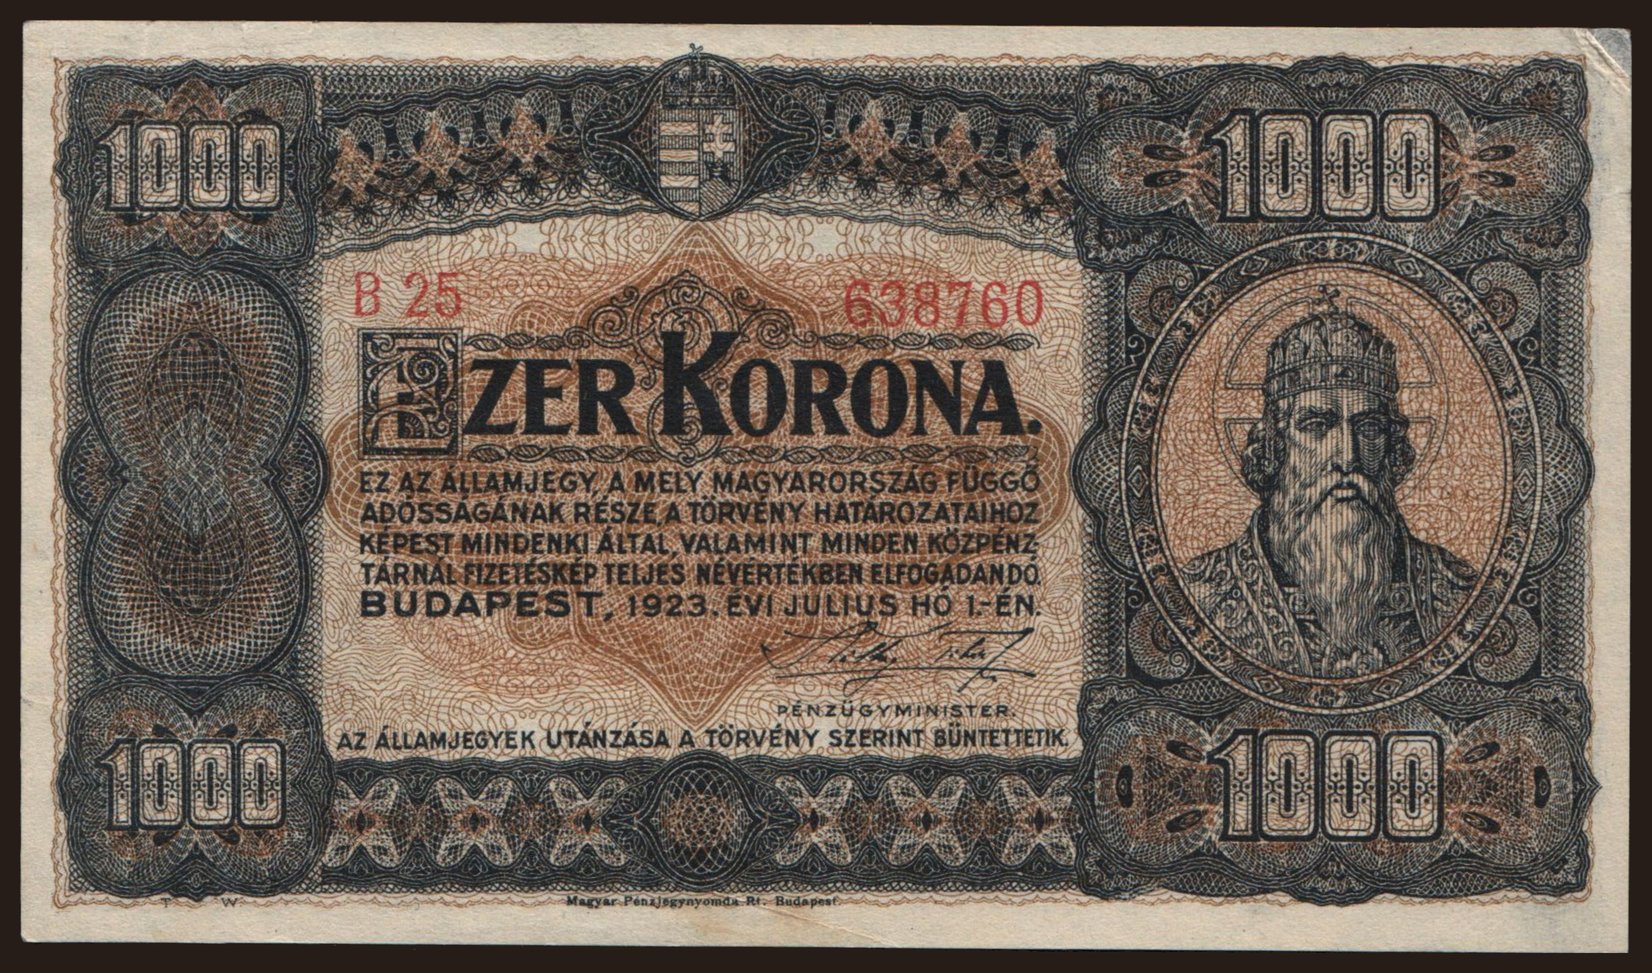 1000 korona, 1923